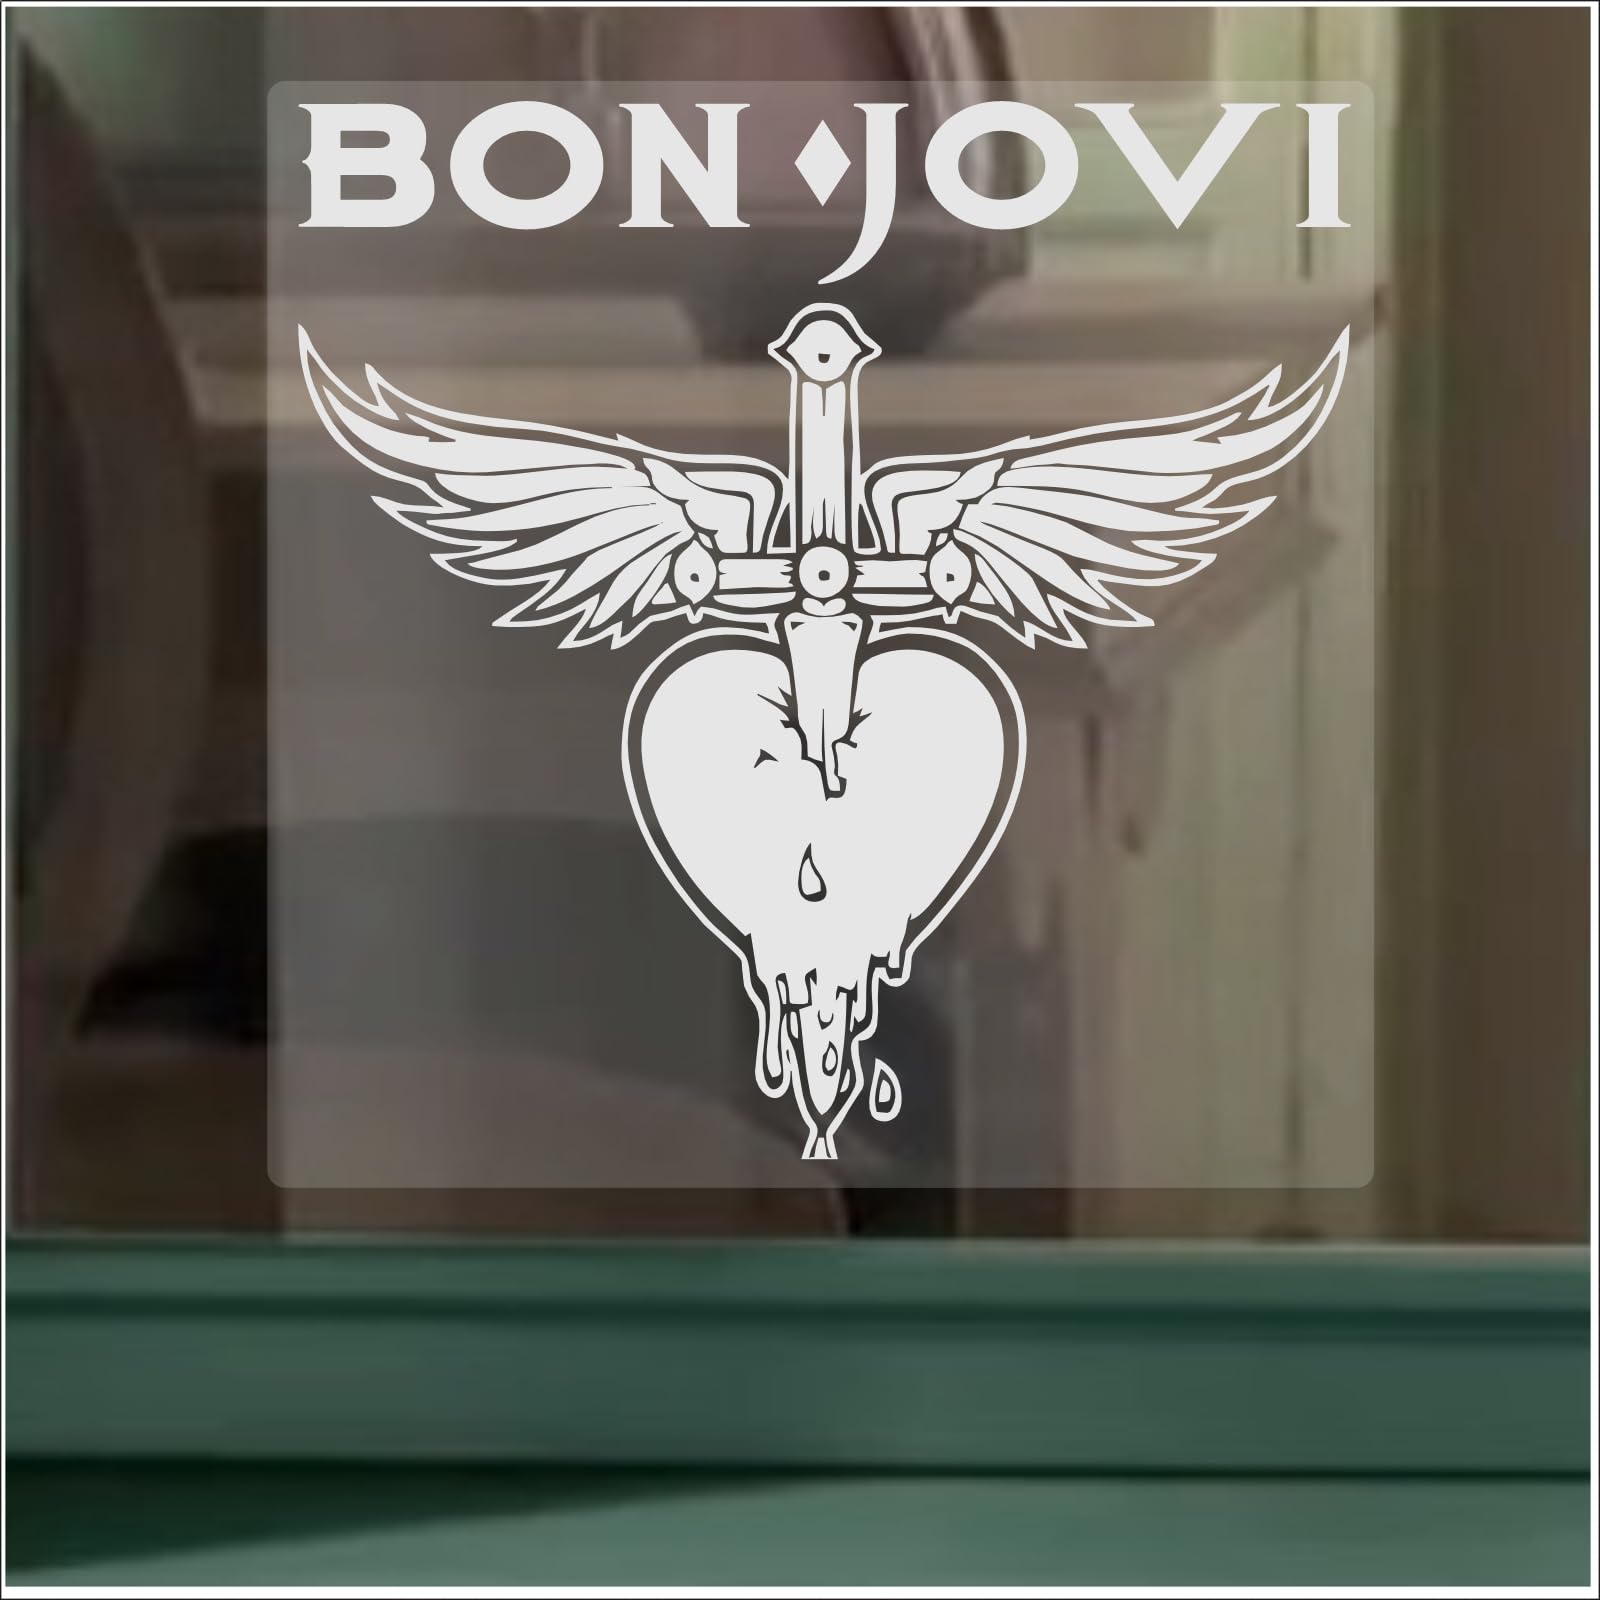 Sign-Rock Band-1 Vinyl-Autoaufkleber, selbstklebend, Motiv Bon Jovi von Platinum Place